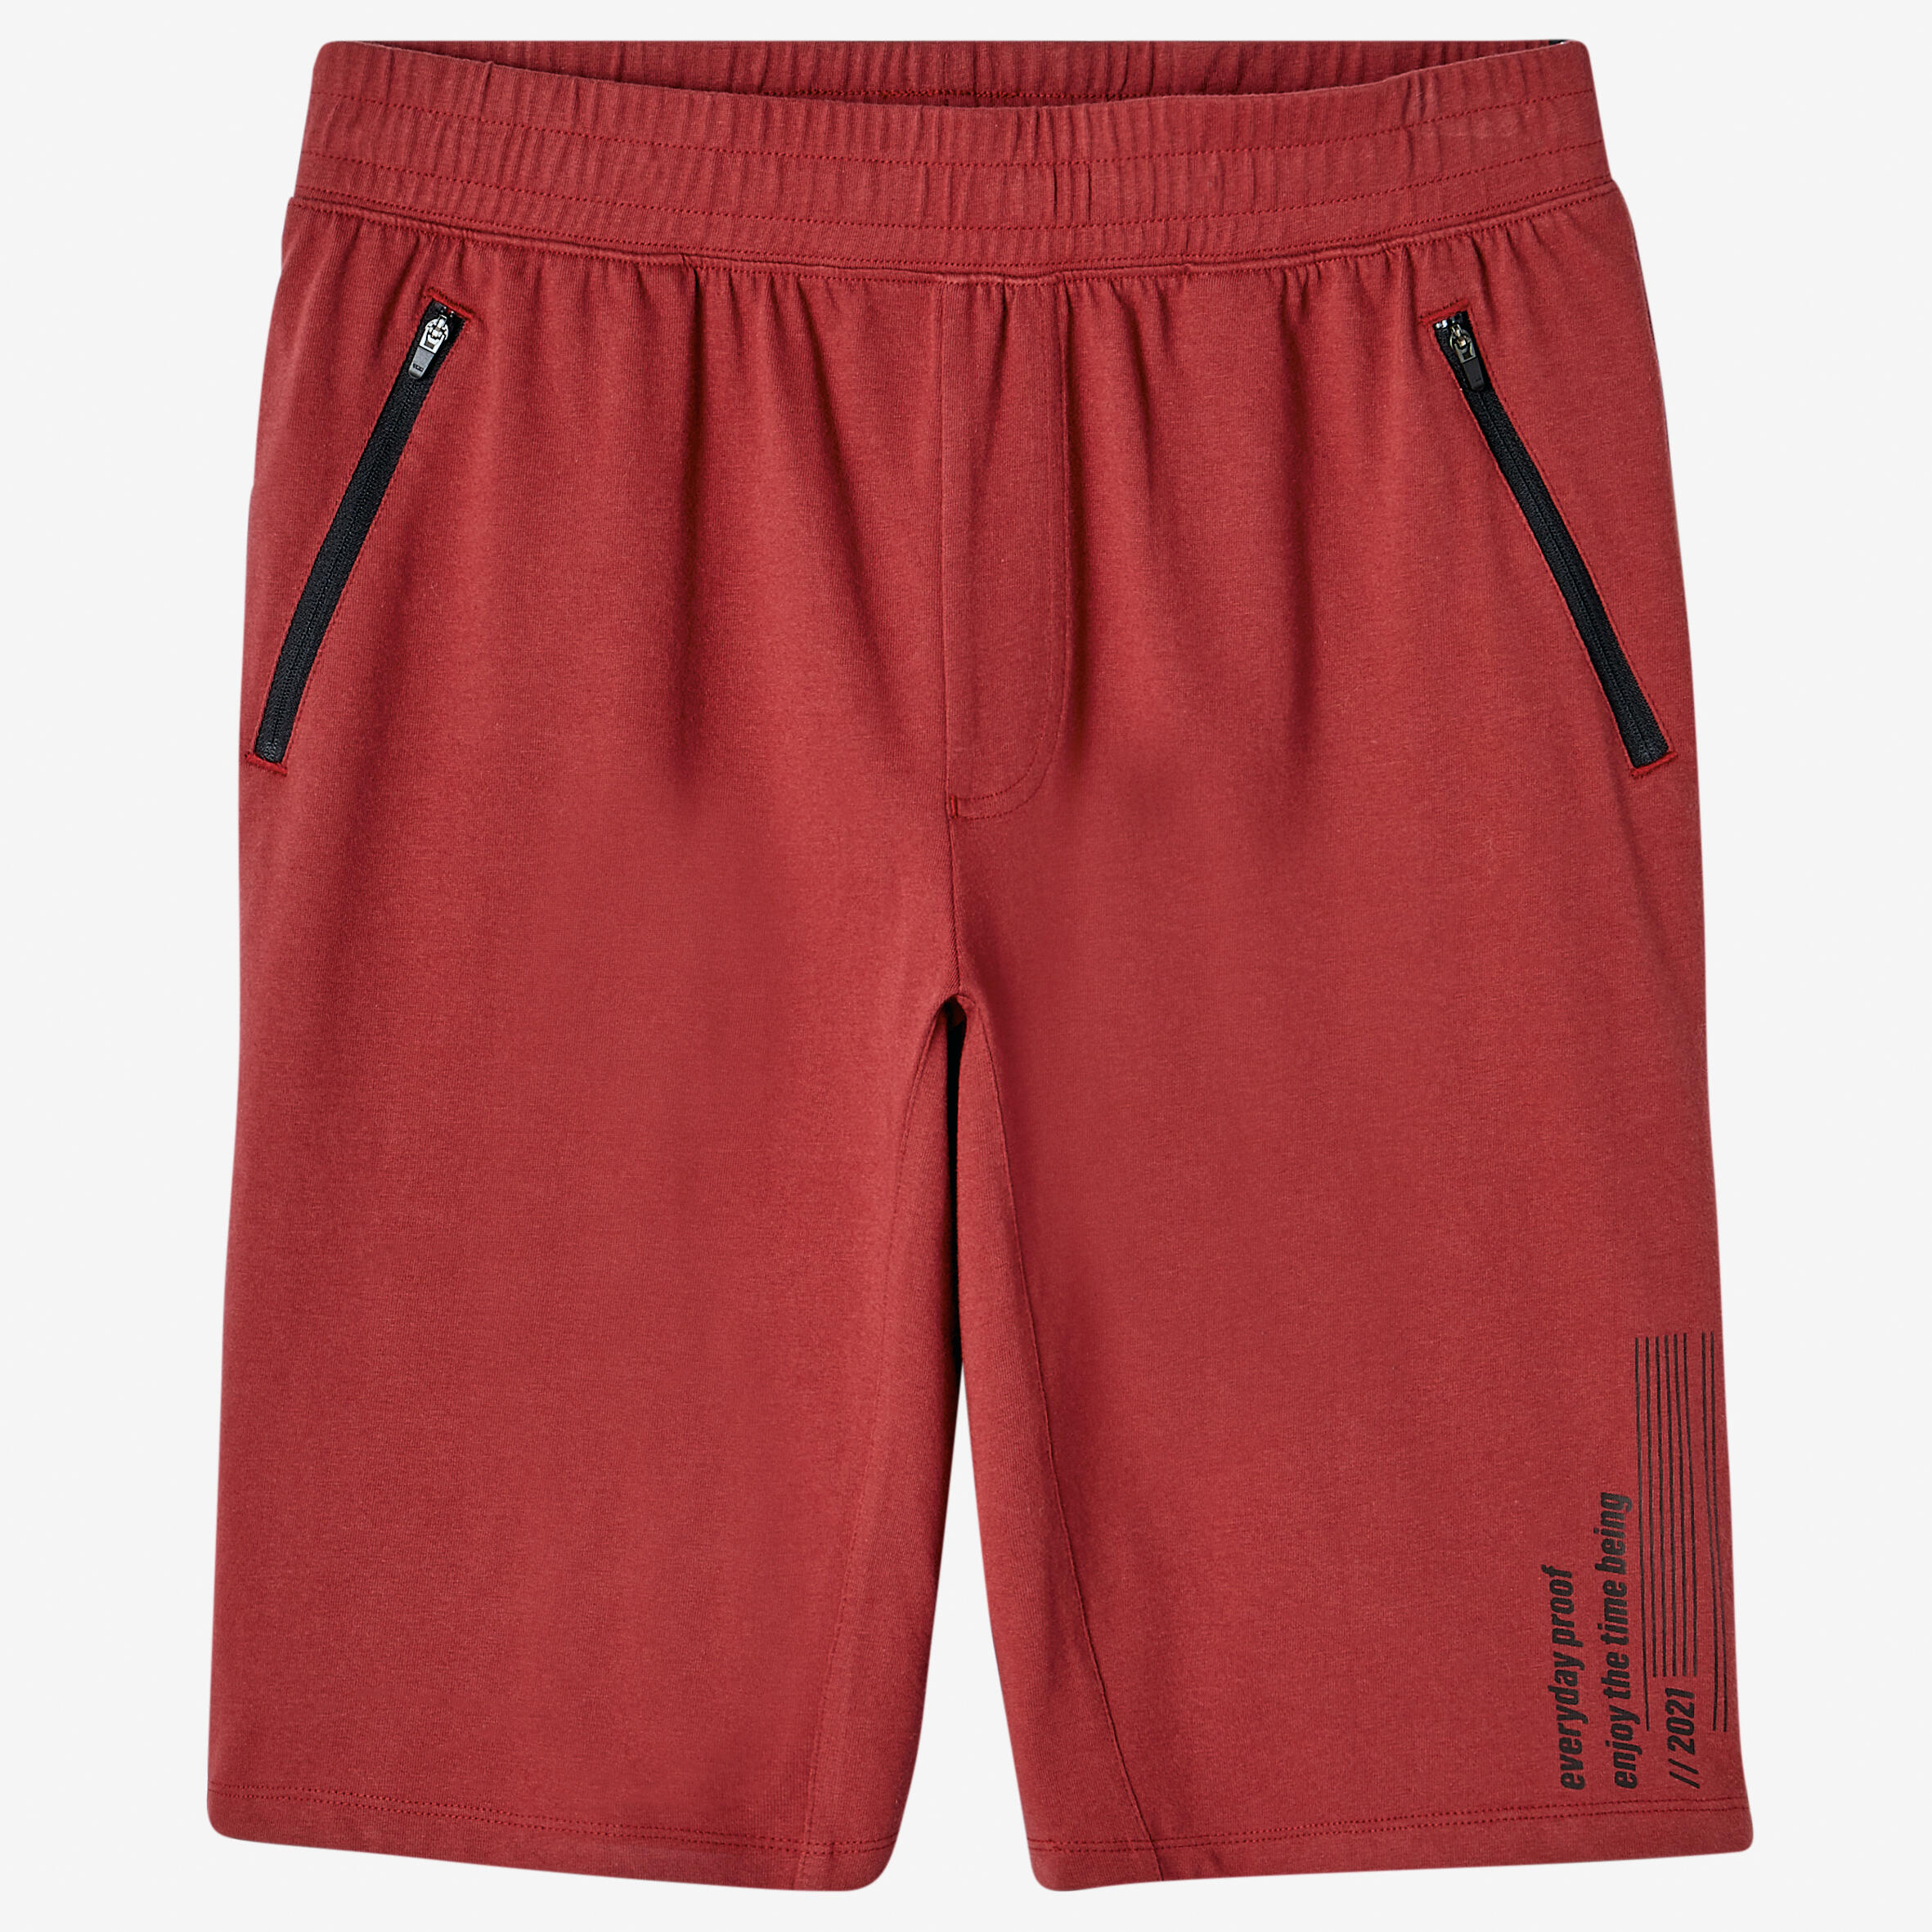 Men's Cotton Blend Shorts - Red 8/8